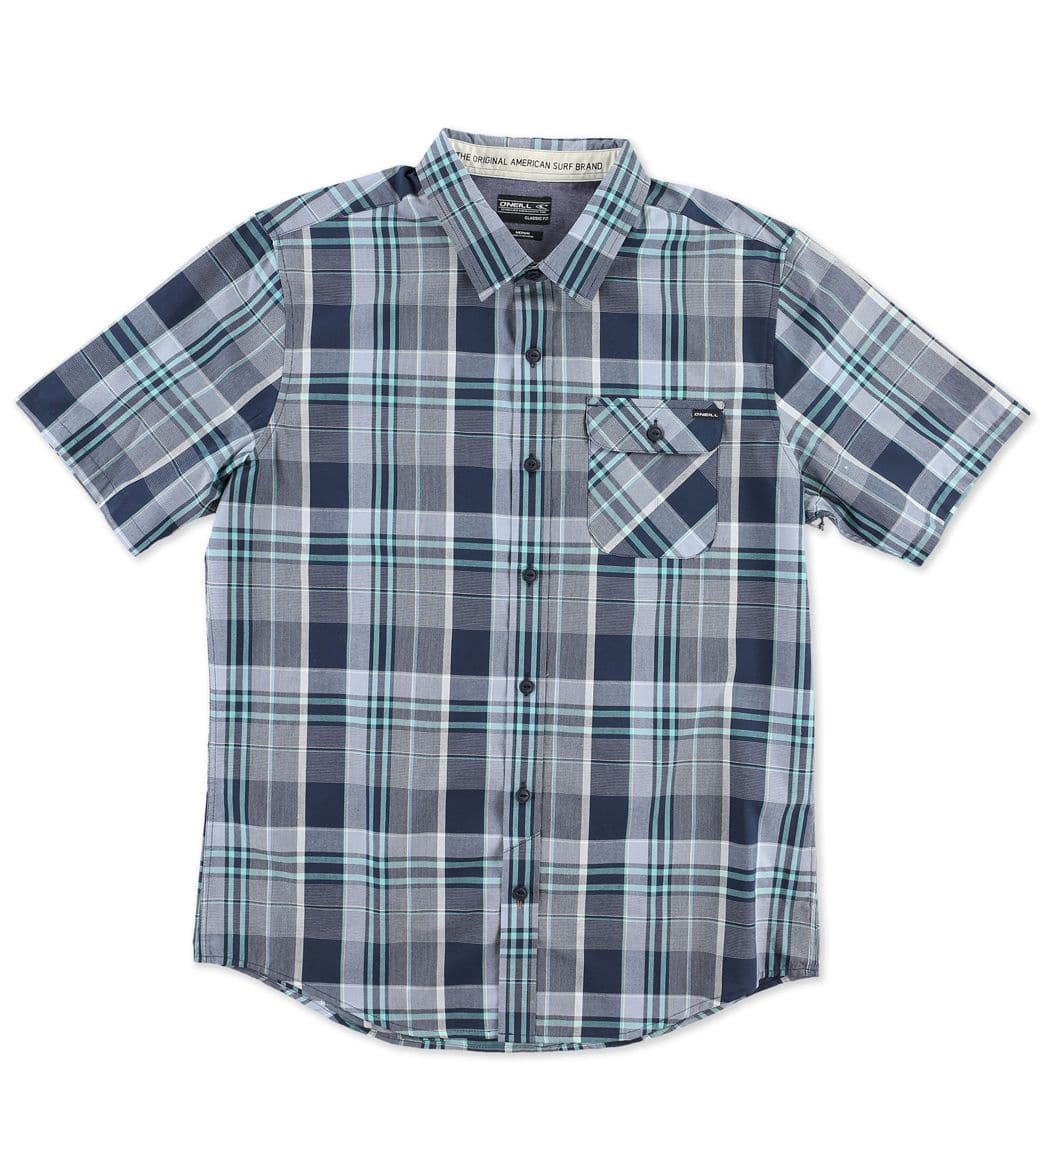 O'neill Men's Emporium Plaid Short Sleeve Shirt - Dark Navy Small Cotton/Polyester - Swimoutlet.com